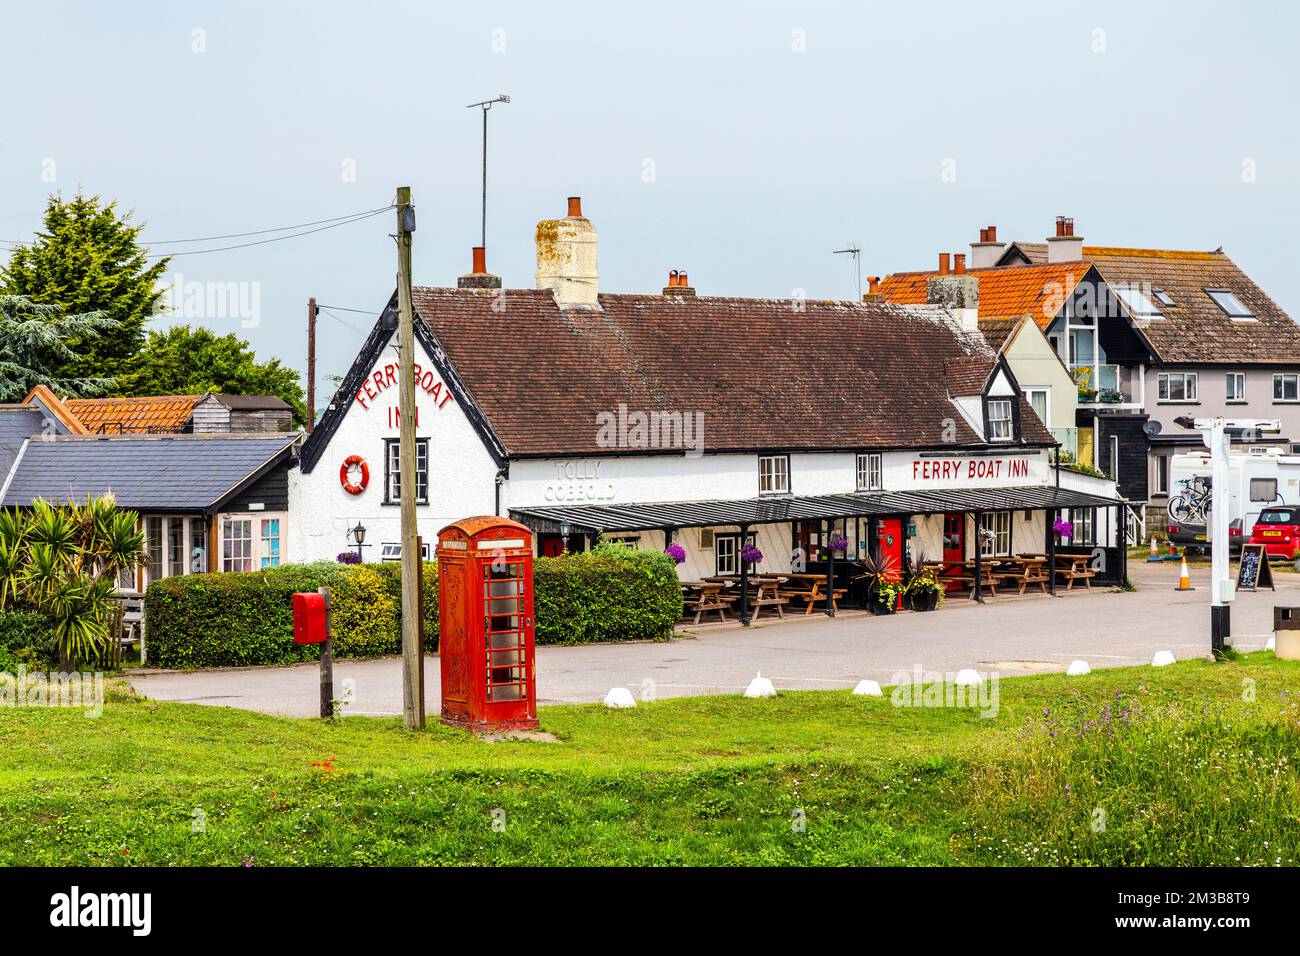 15th century heritage pub The Ferry Boat Inn in Felixstowe, Suffolk, UK Stock Photo